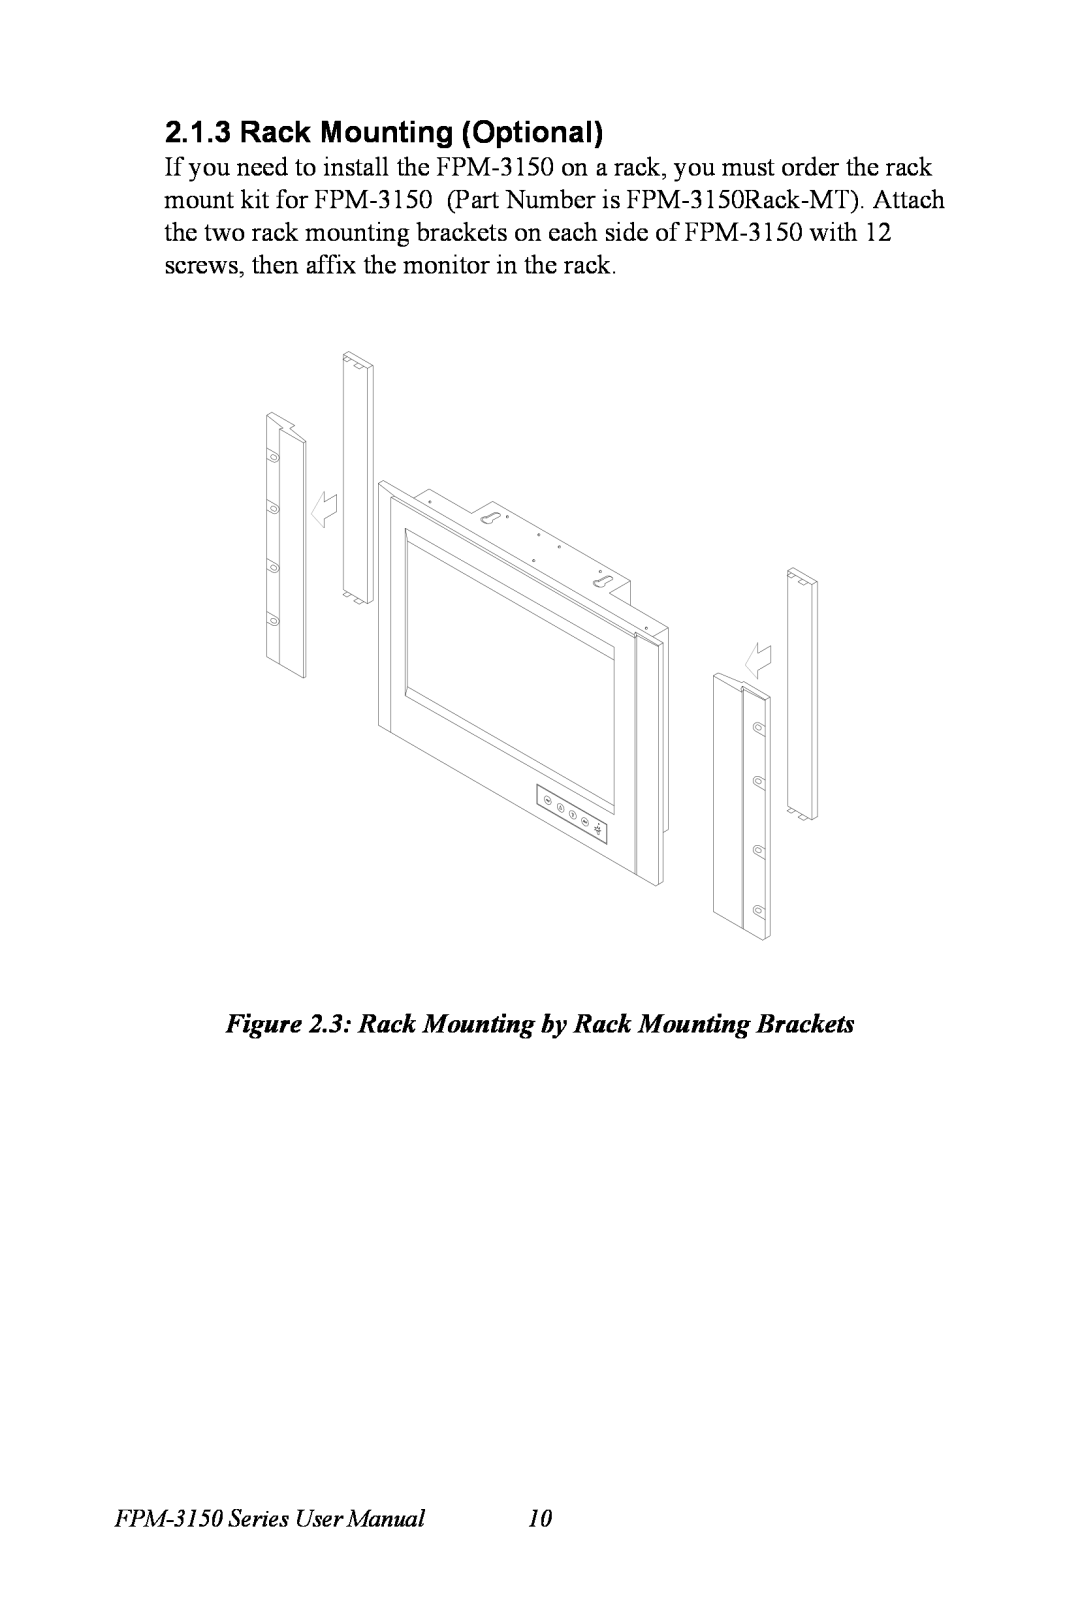 Advantech user manual Rack Mounting Optional, 3 Rack Mounting by Rack Mounting Brackets, FPM-3150 Series User Manual 